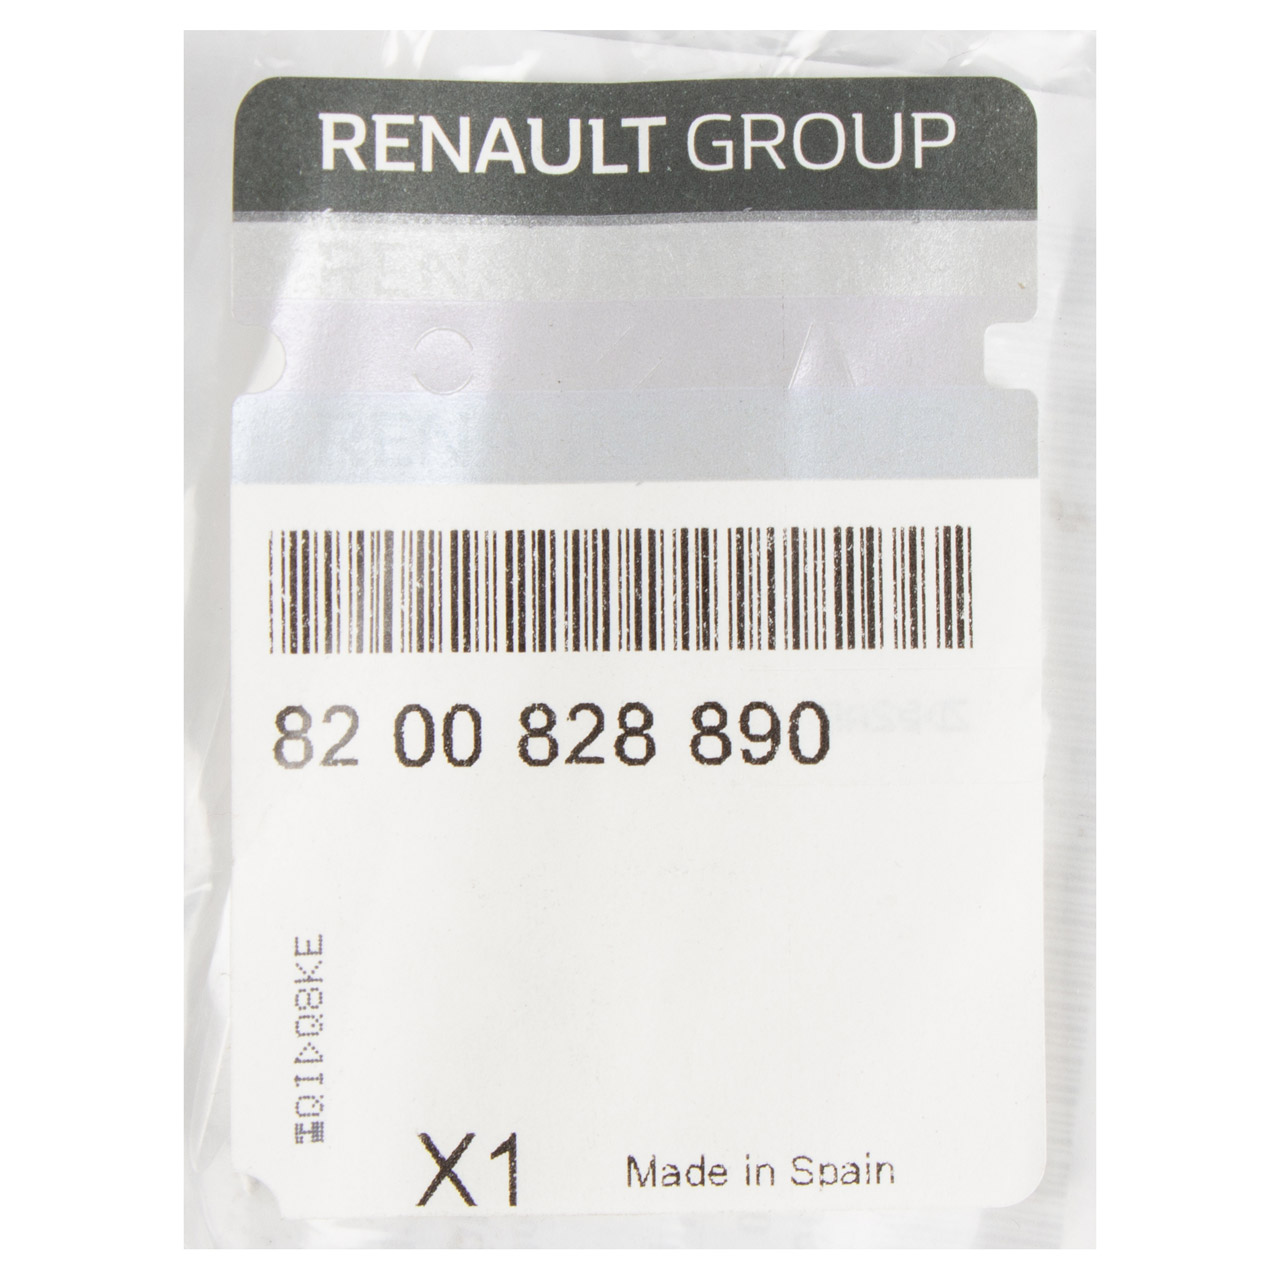 ORIGINAL Renault Ölpeilstab Ölstab Ölmessstab Peilstab Twingo 2 1.6 RS 133 PS 8200828890